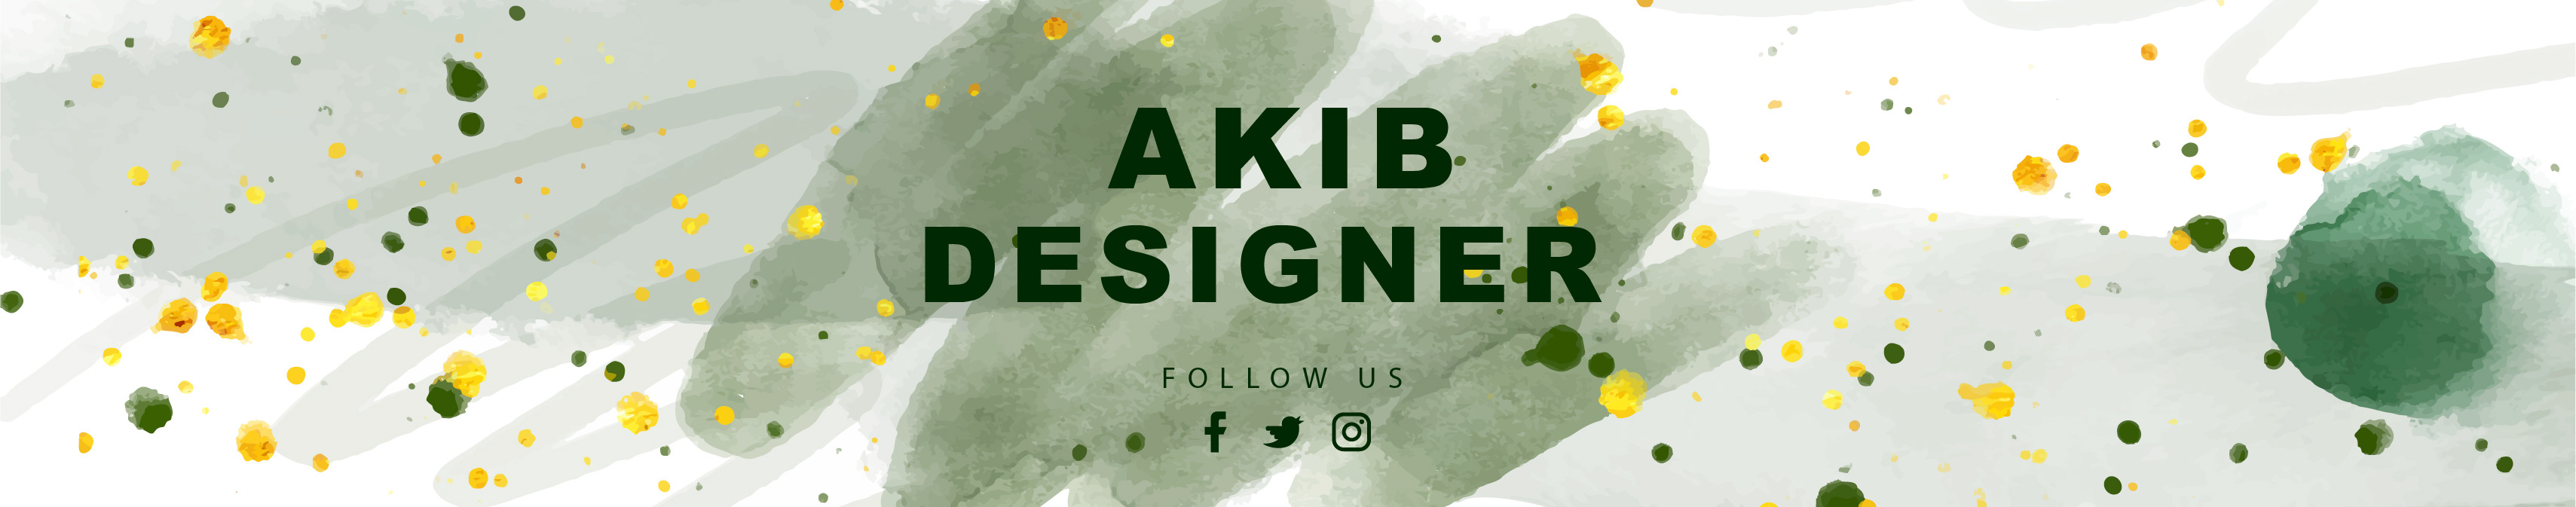 akib sad's profile banner